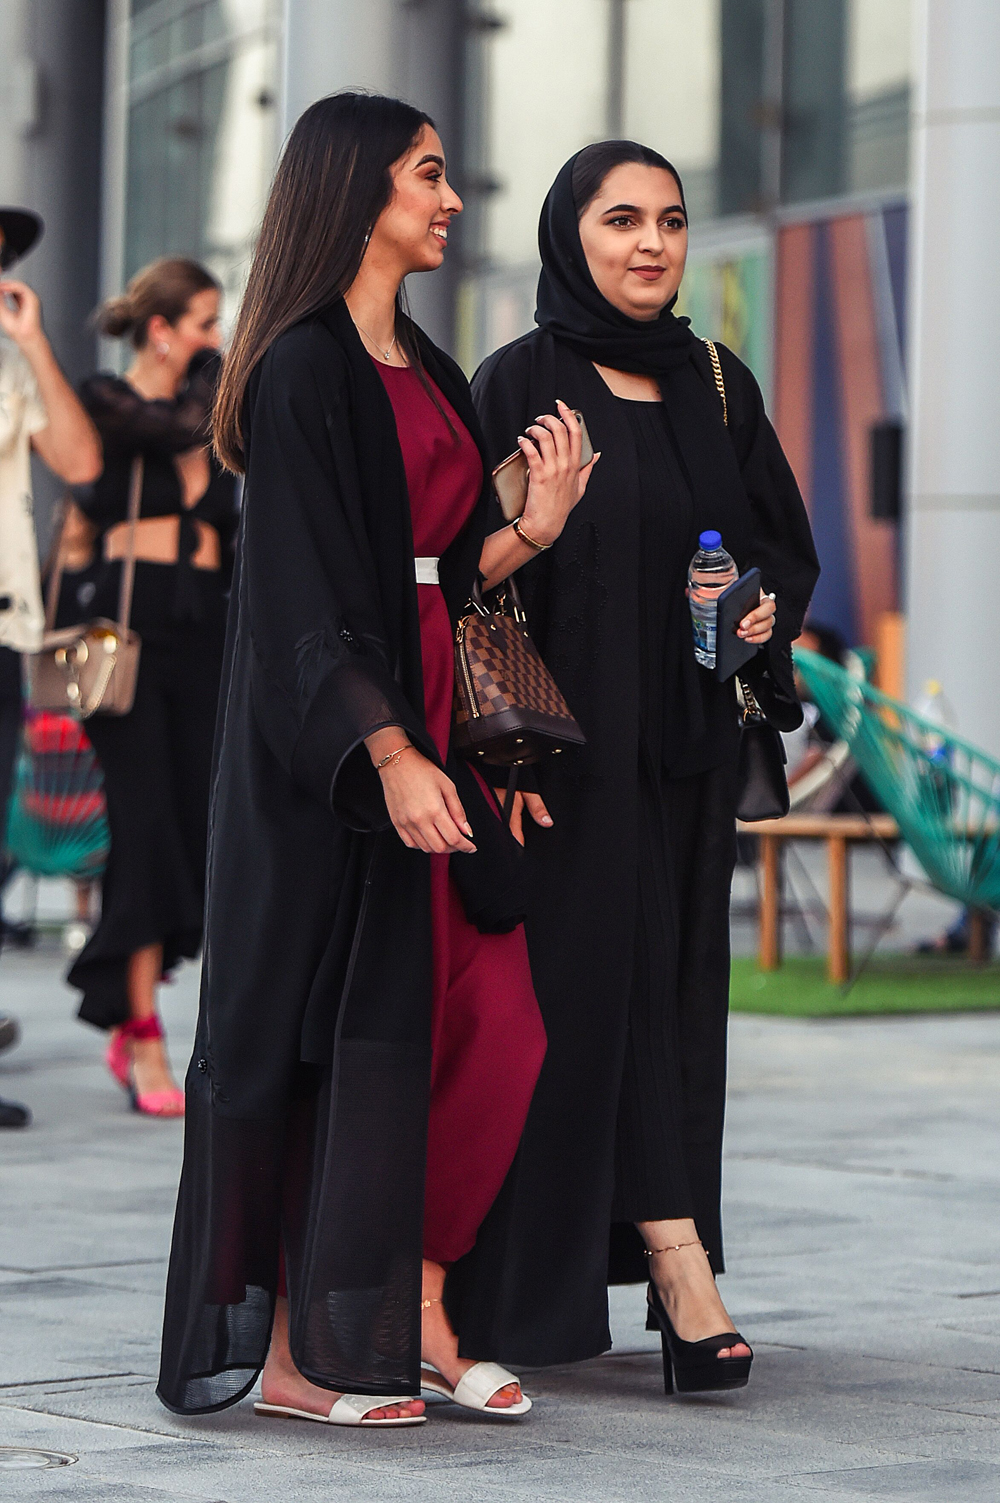 30 Most Popular Dubai Street Style Fashion Ideas For Women | vlr.eng.br